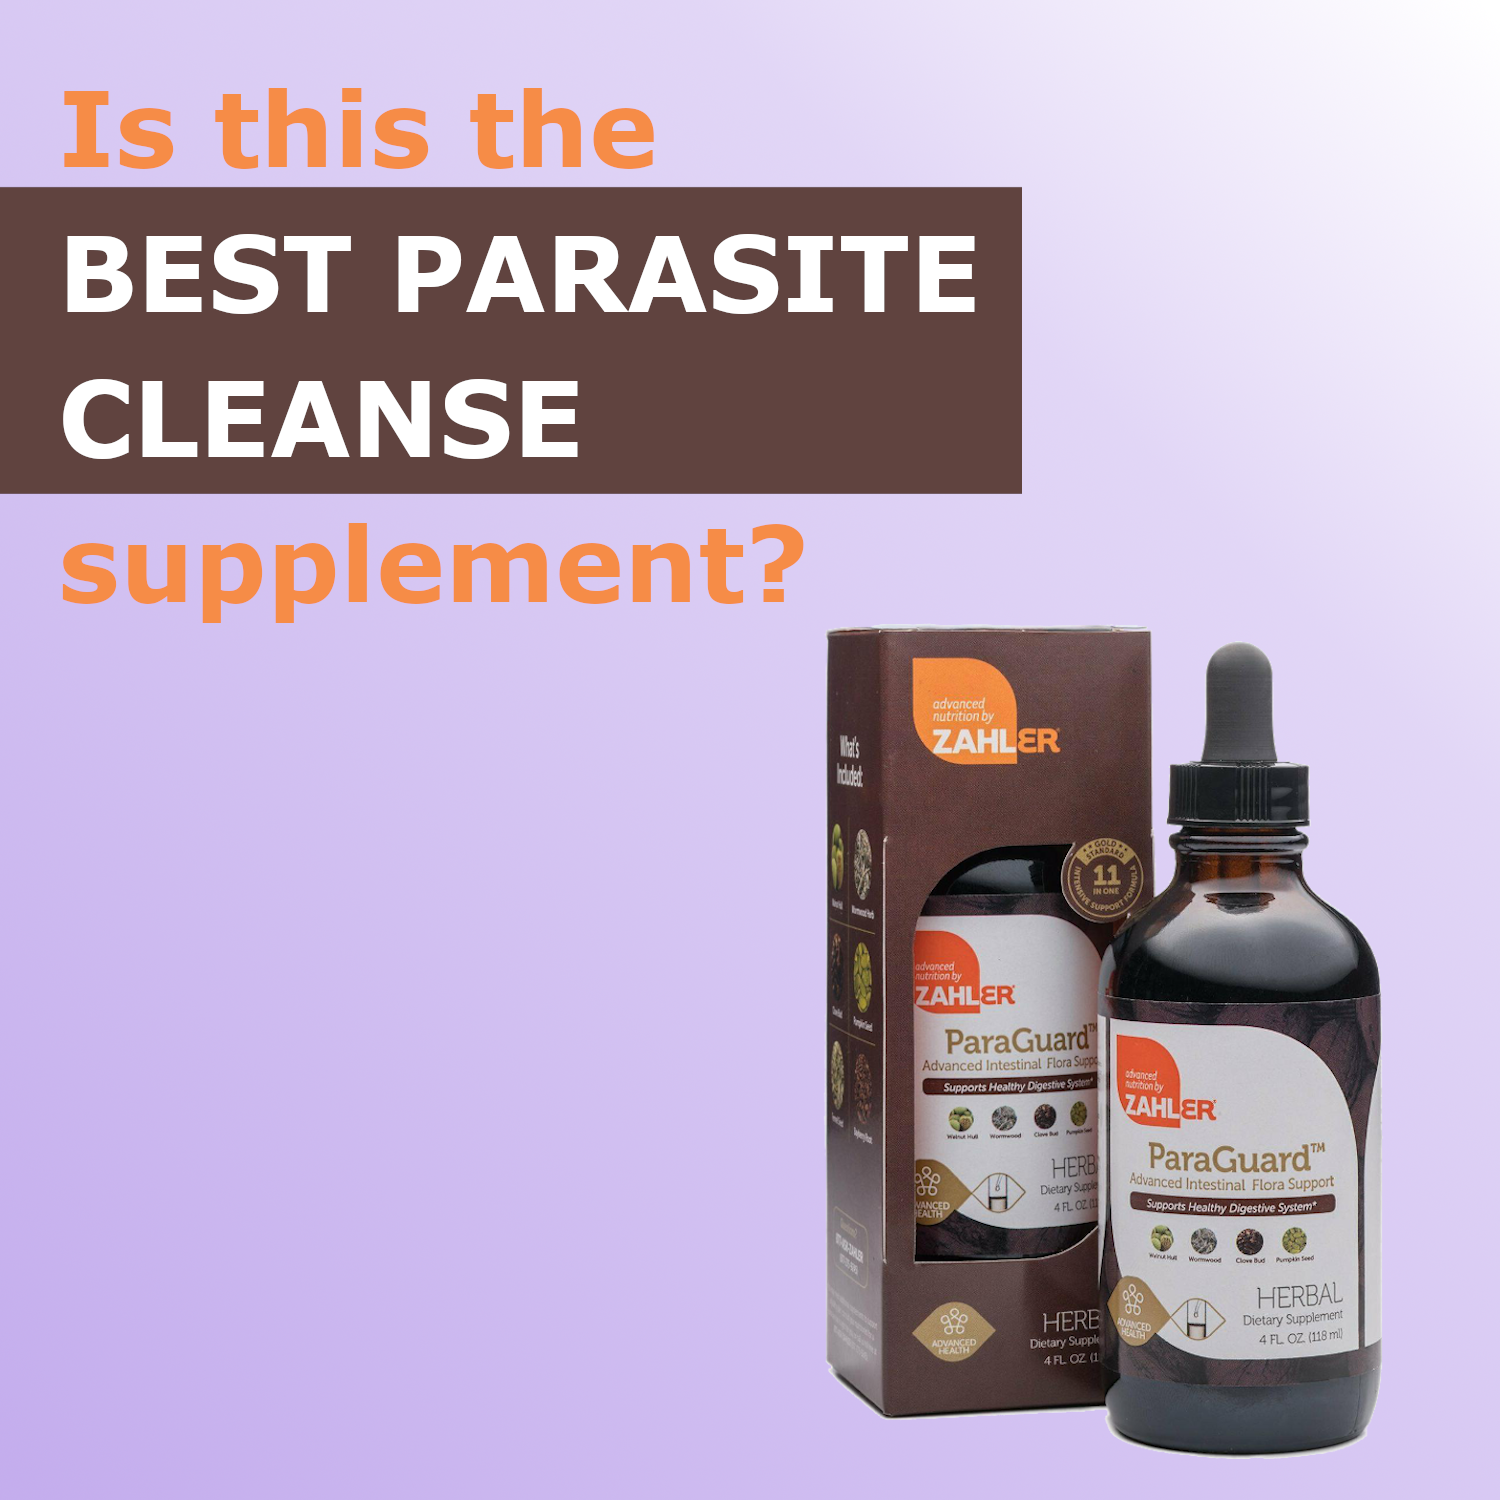 Is Zahler’s ParaGuard the BEST parasite cleanse?